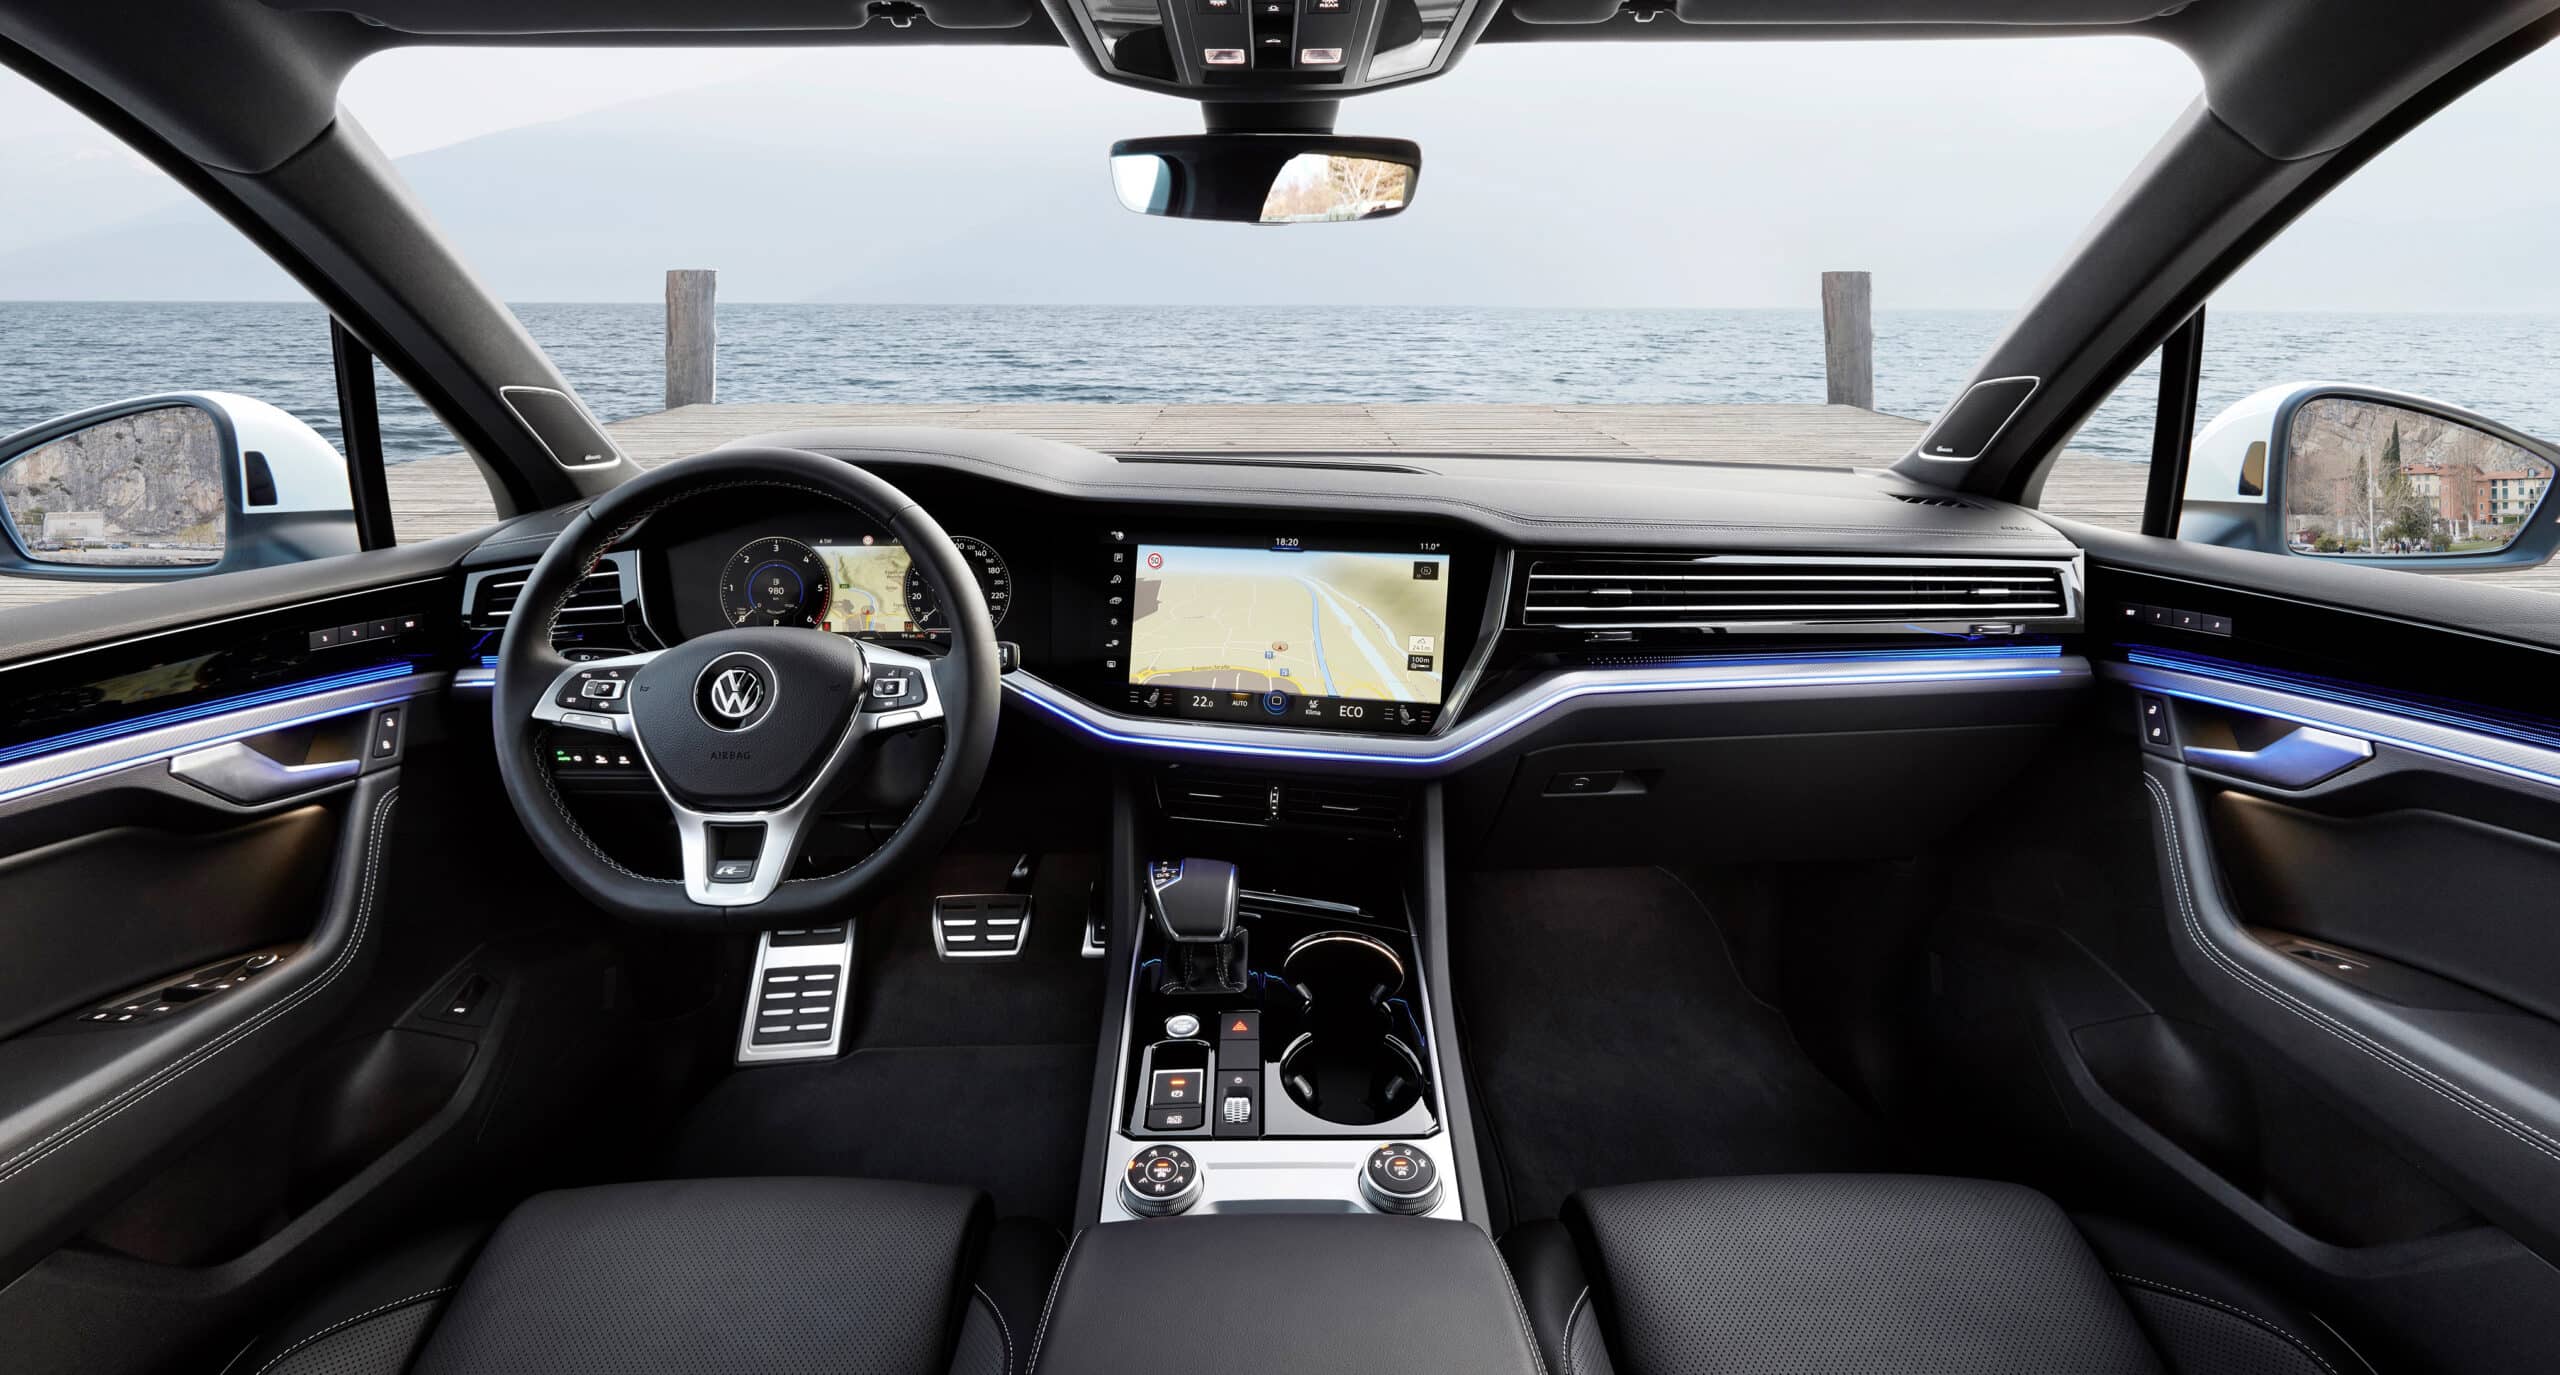 VW Touareg cockpit